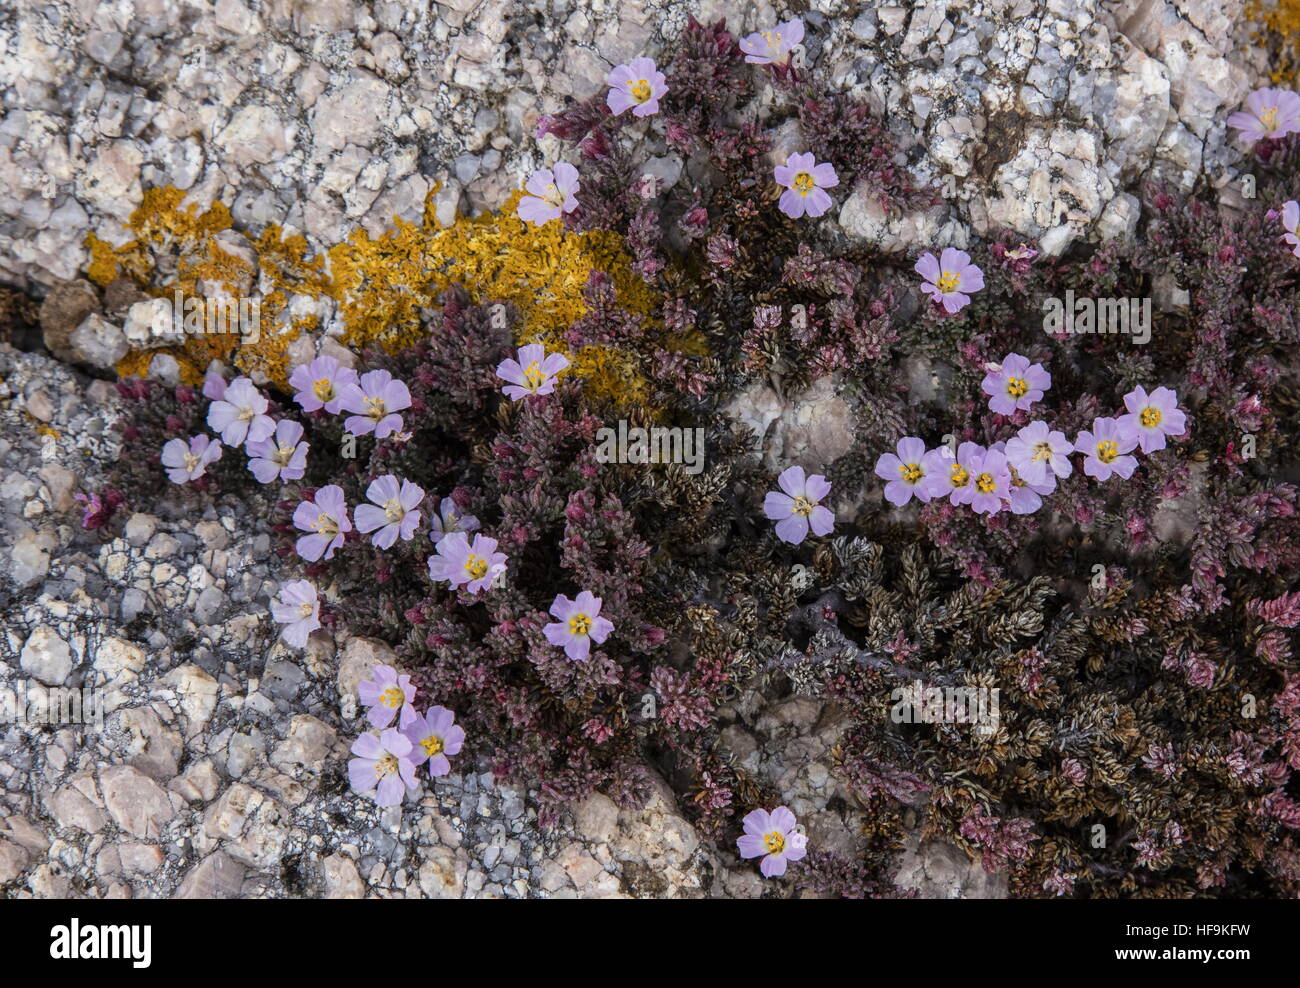 Sea heath, Frankenia laevis in flower on coastal granite, Corsica. Stock Photo